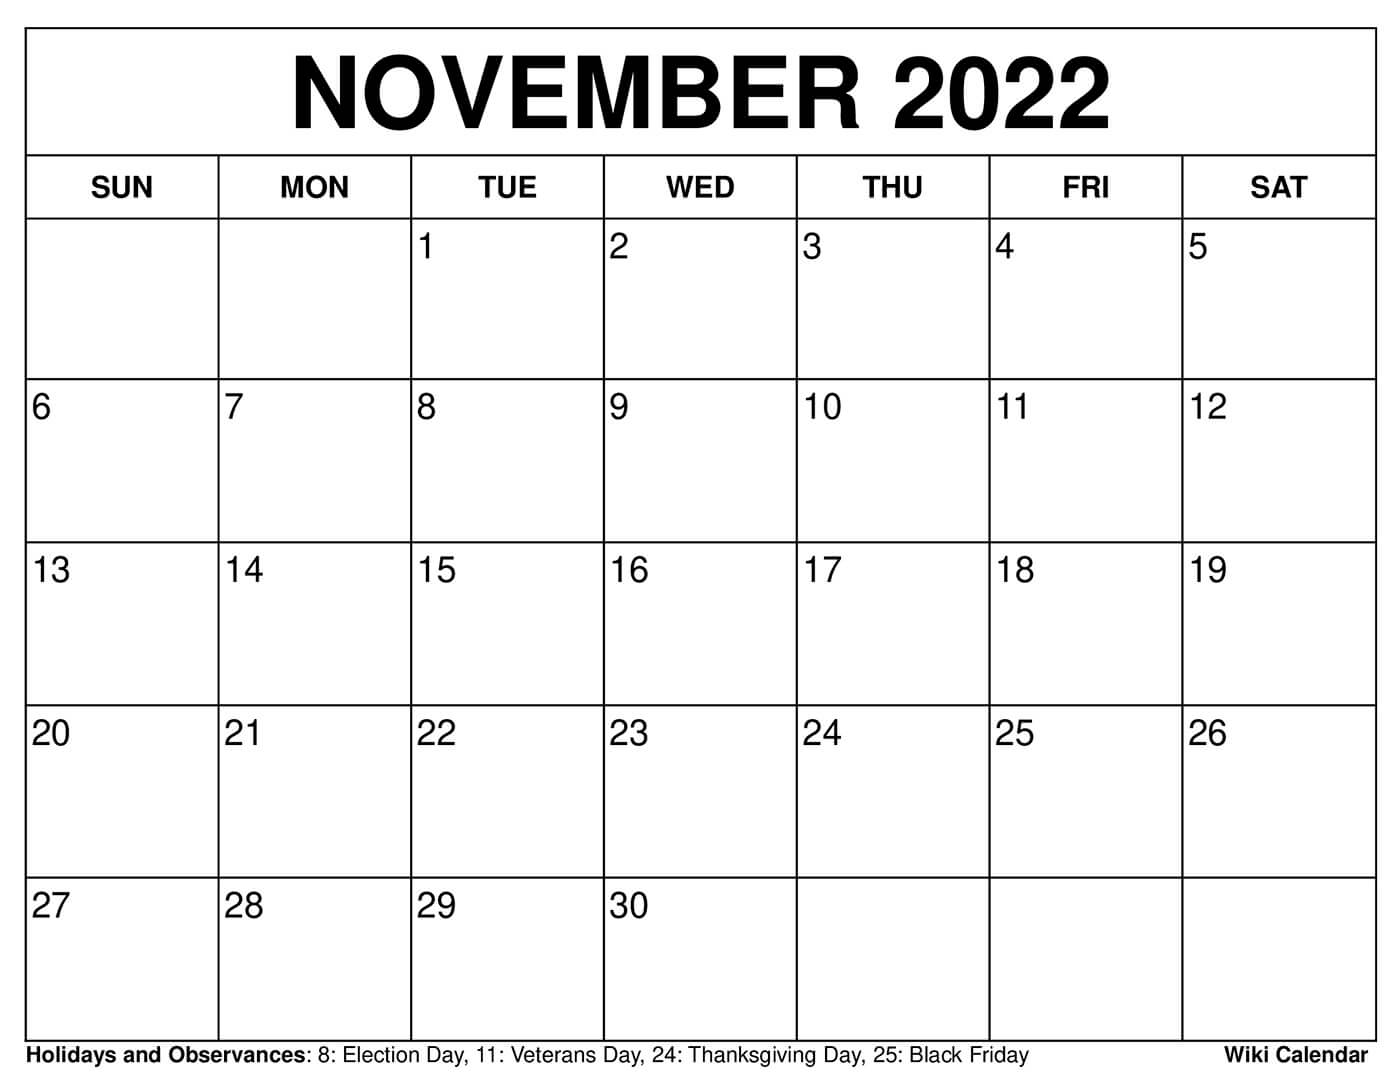 Novemeber 2022 Calendar Free Printable November 2022 Calendars - Wiki Calendar